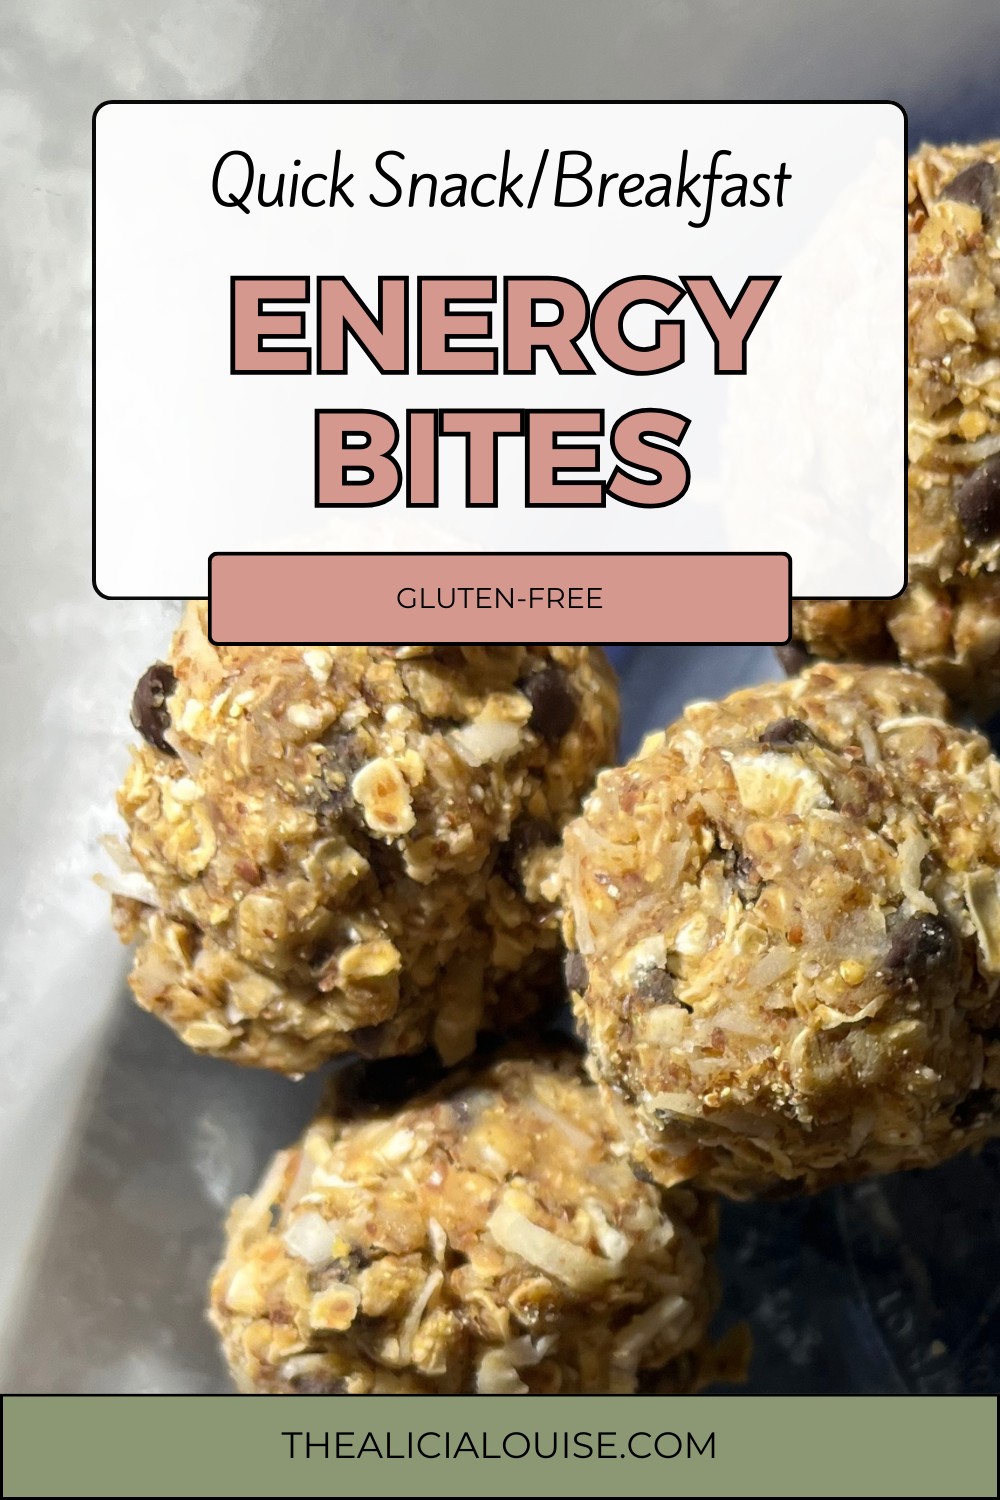 Quick Snack/Breakfast Gluten-Free Energy Bites